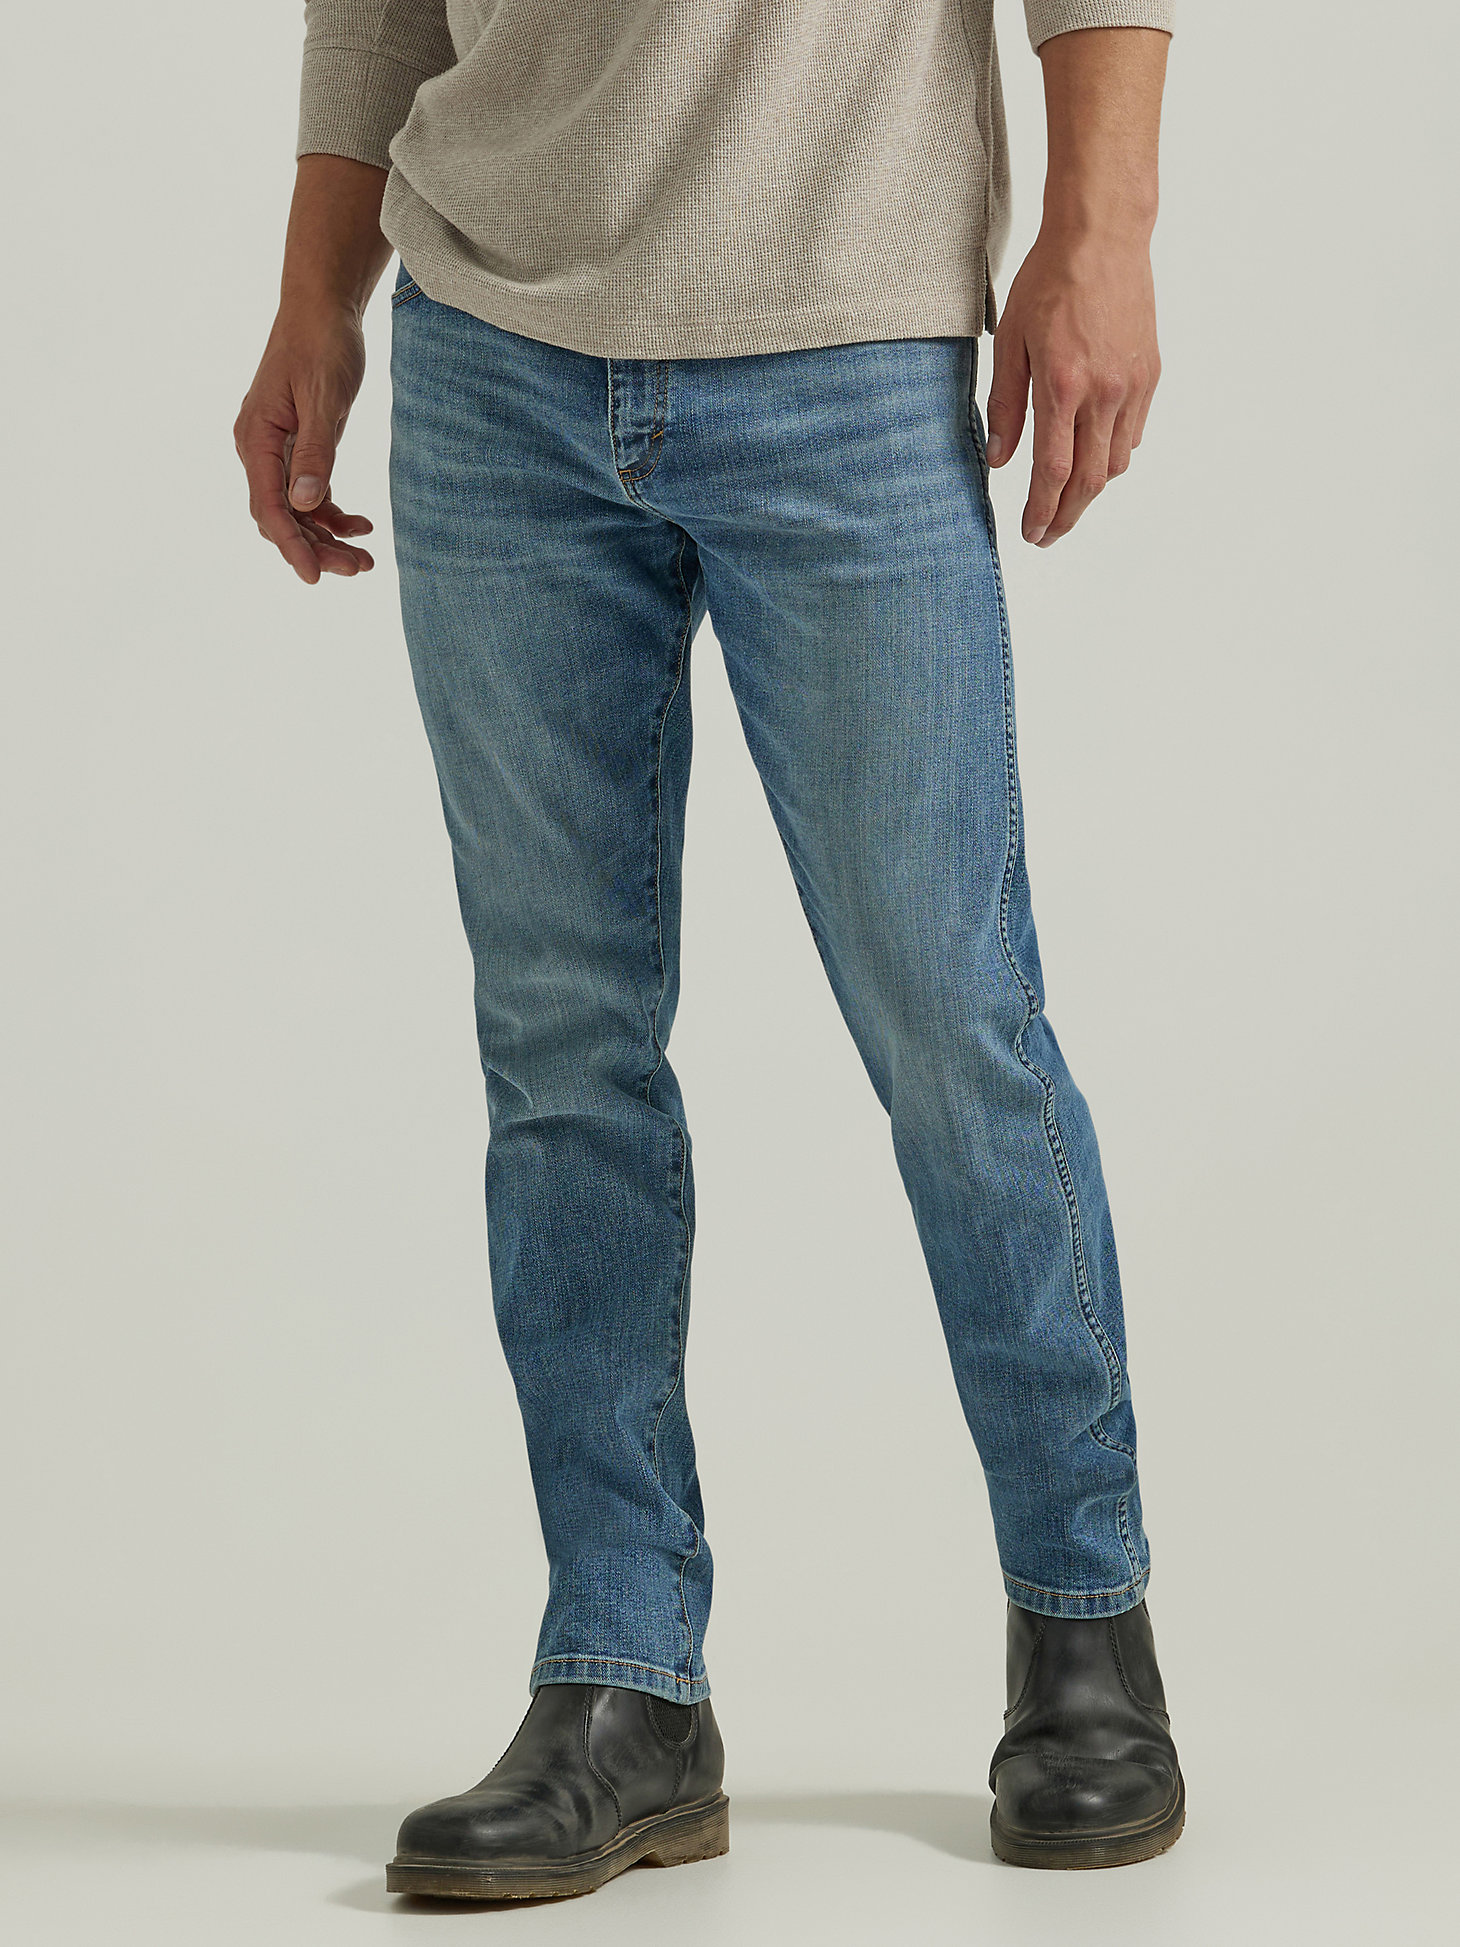 Men's Tapered Regular Fit Jean in Light Wash alternative view 1